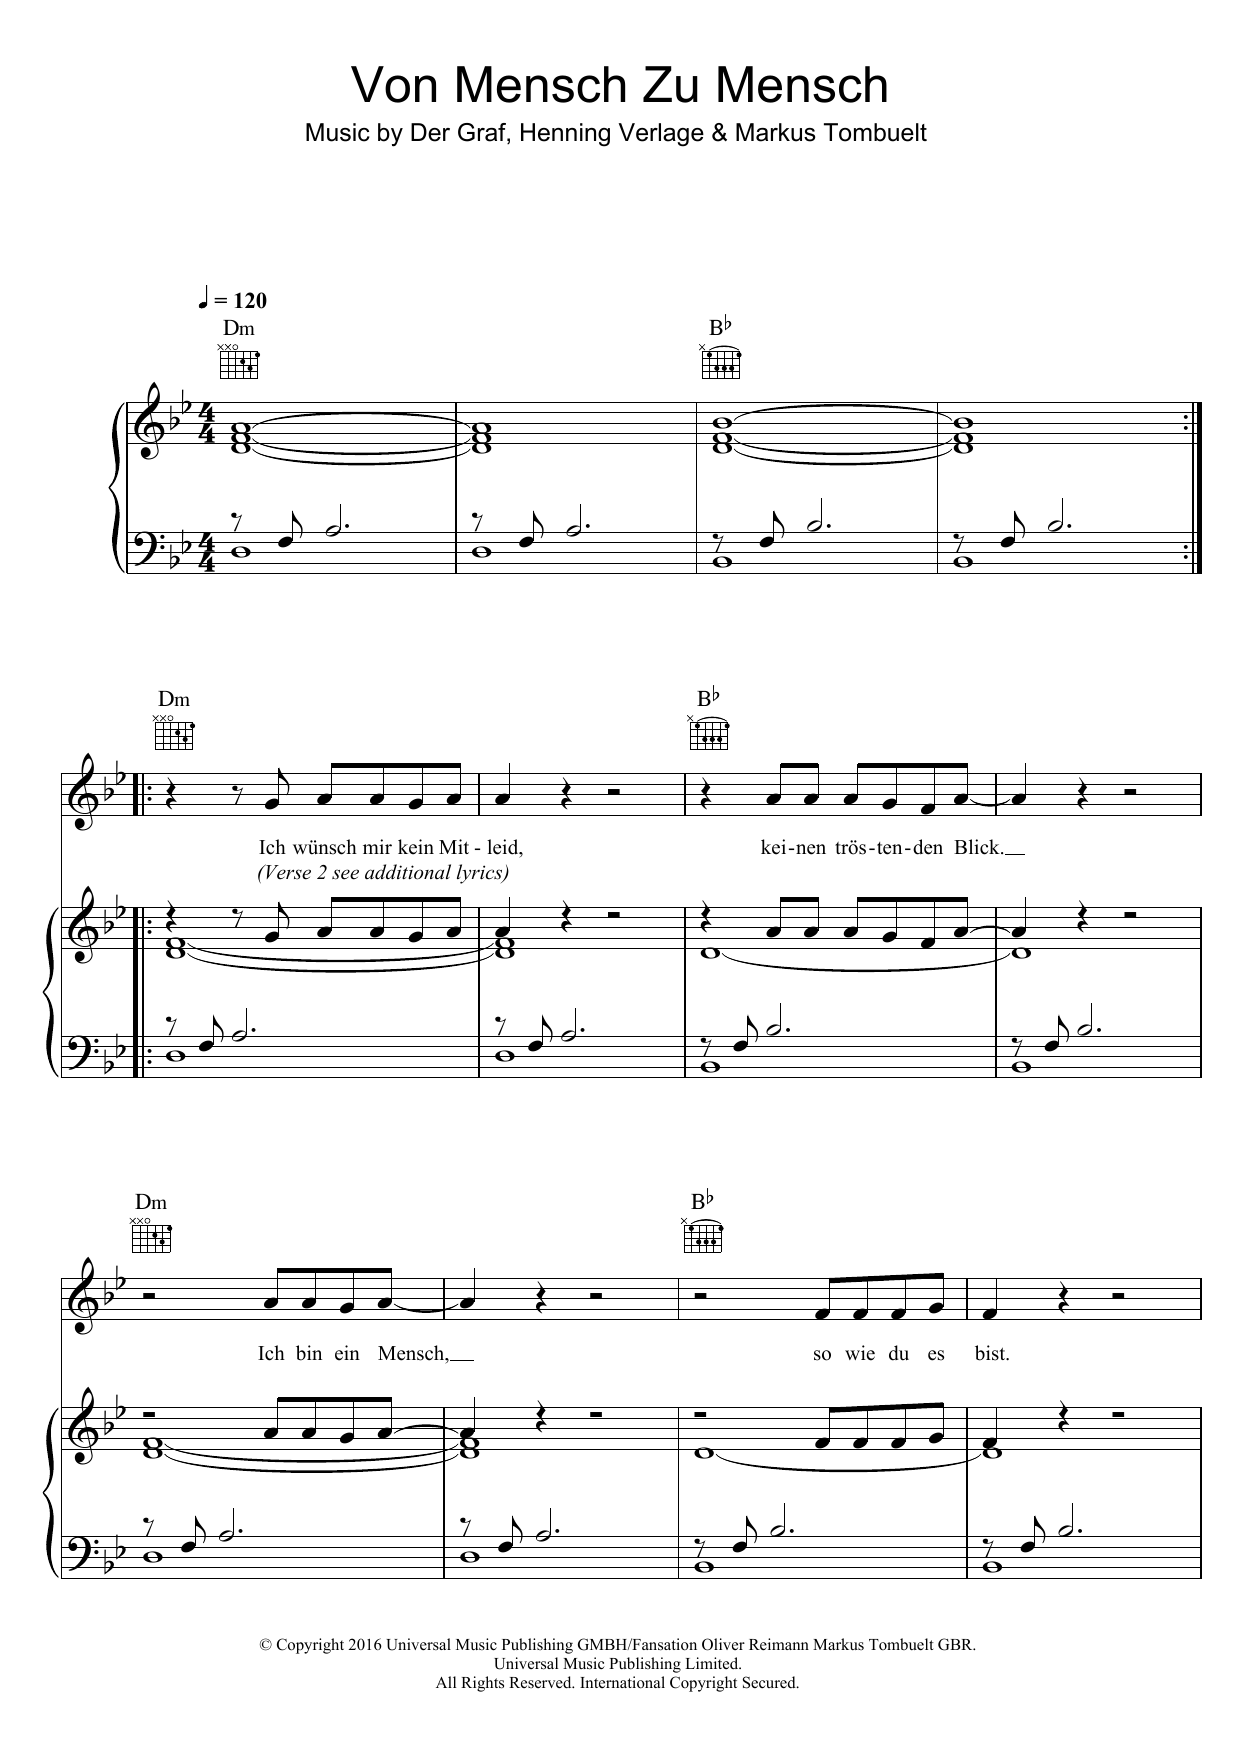 Unheilig Von Mensch Zu Mensch sheet music notes and chords arranged for Piano, Vocal & Guitar Chords